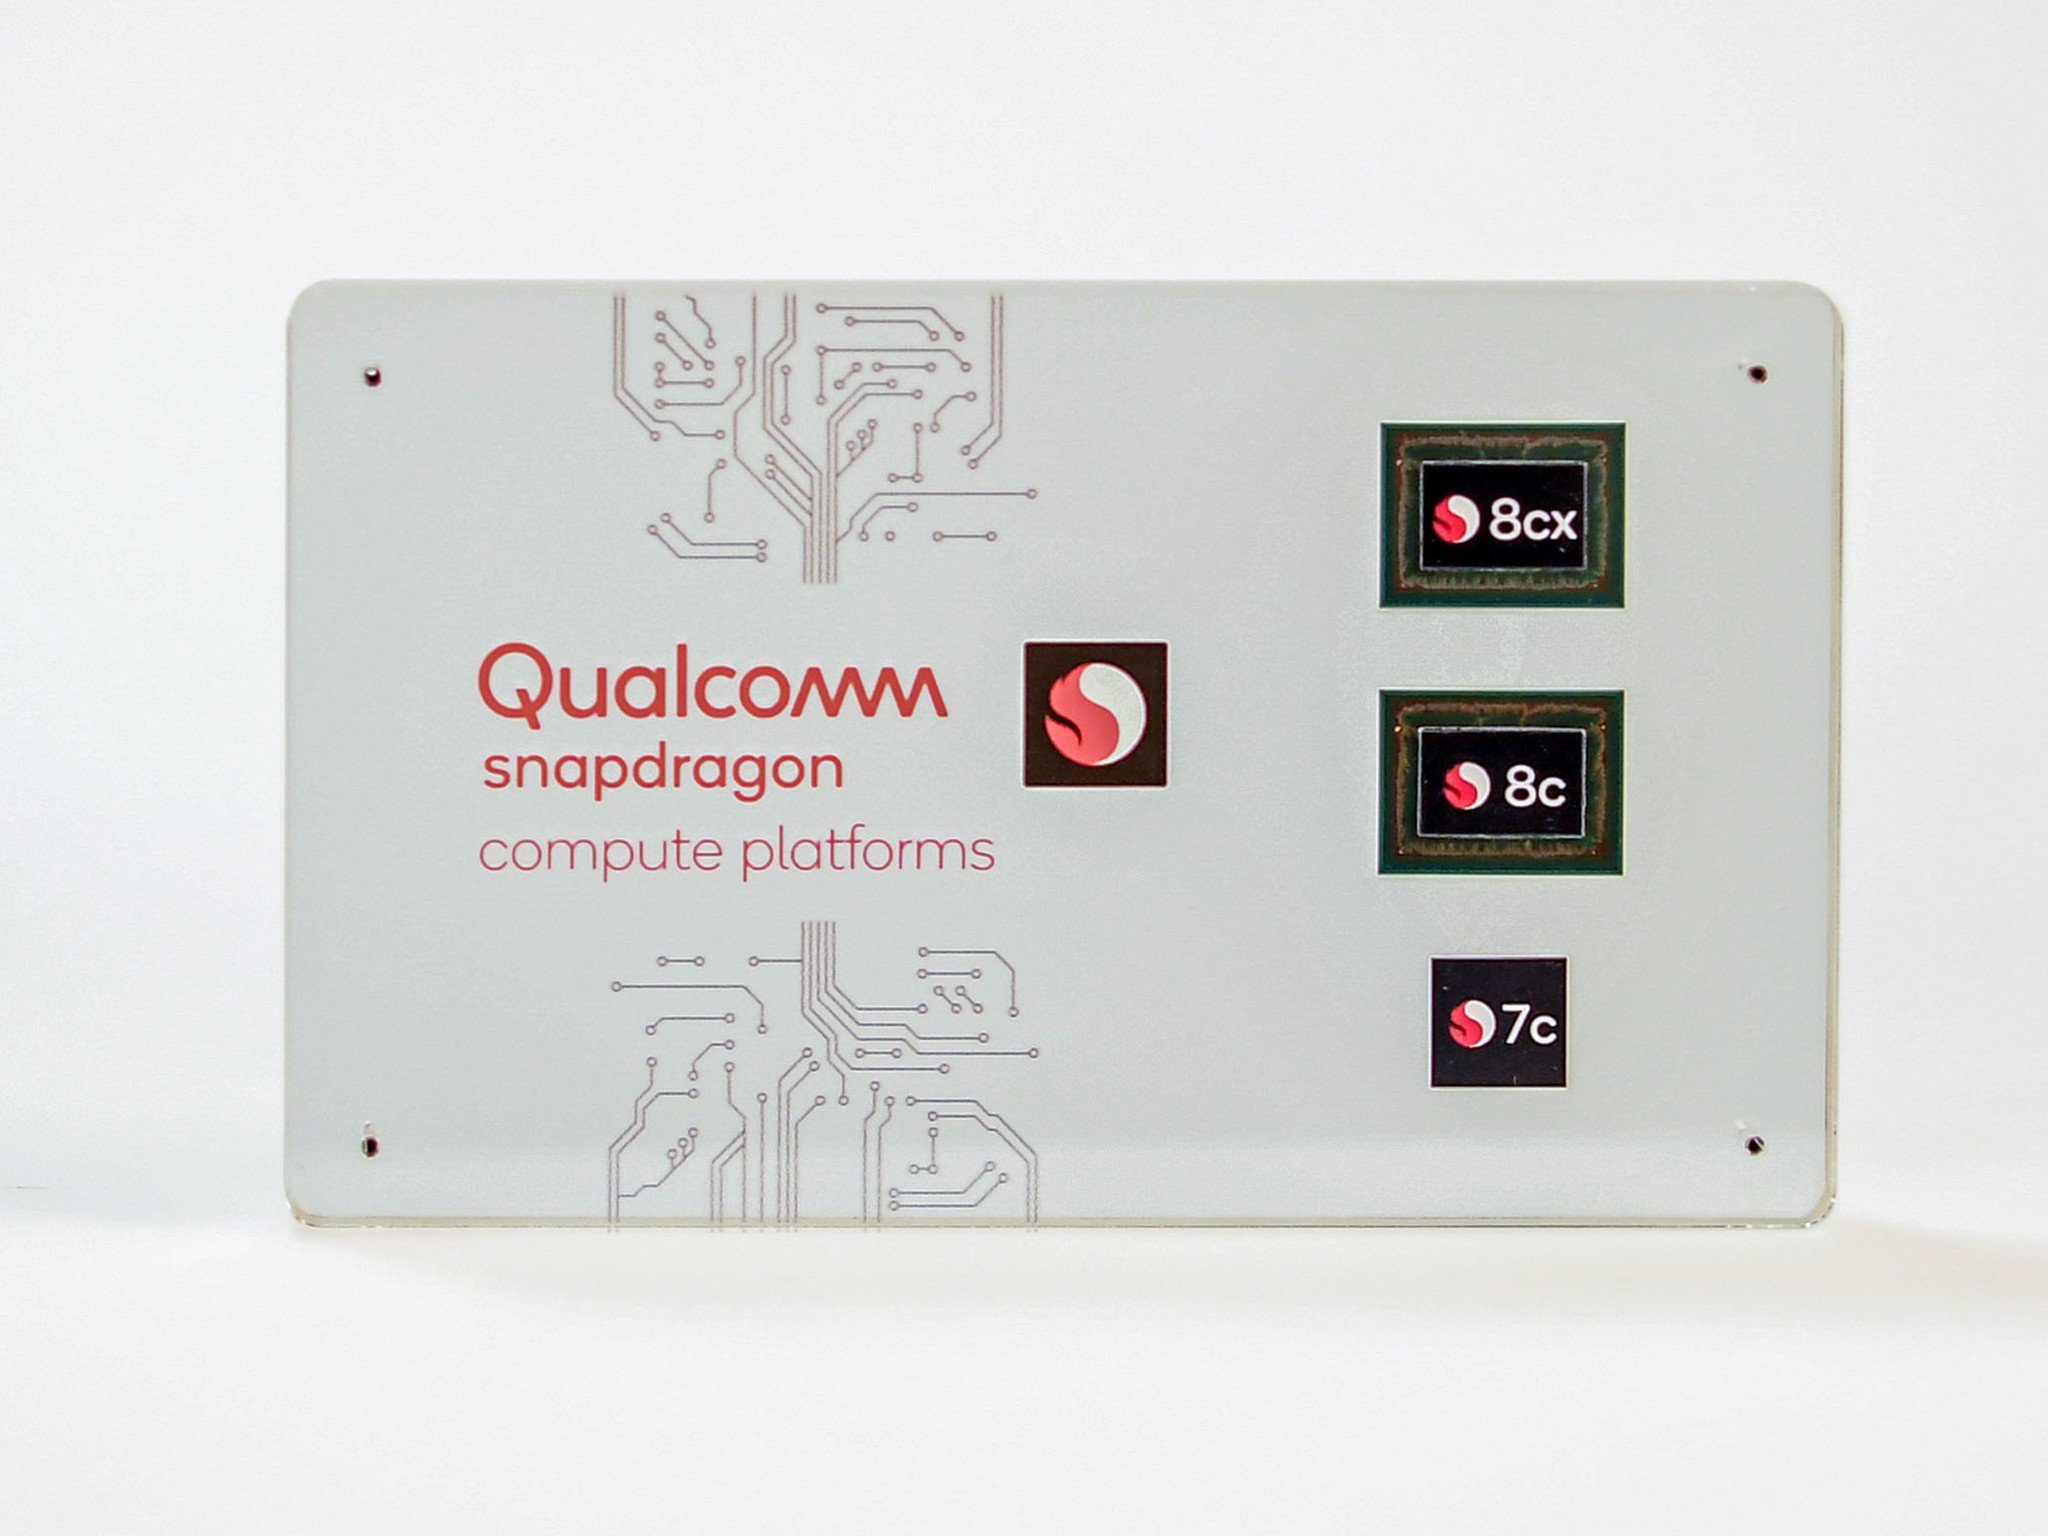 Qualcomm Snapdragon 8c and 7c